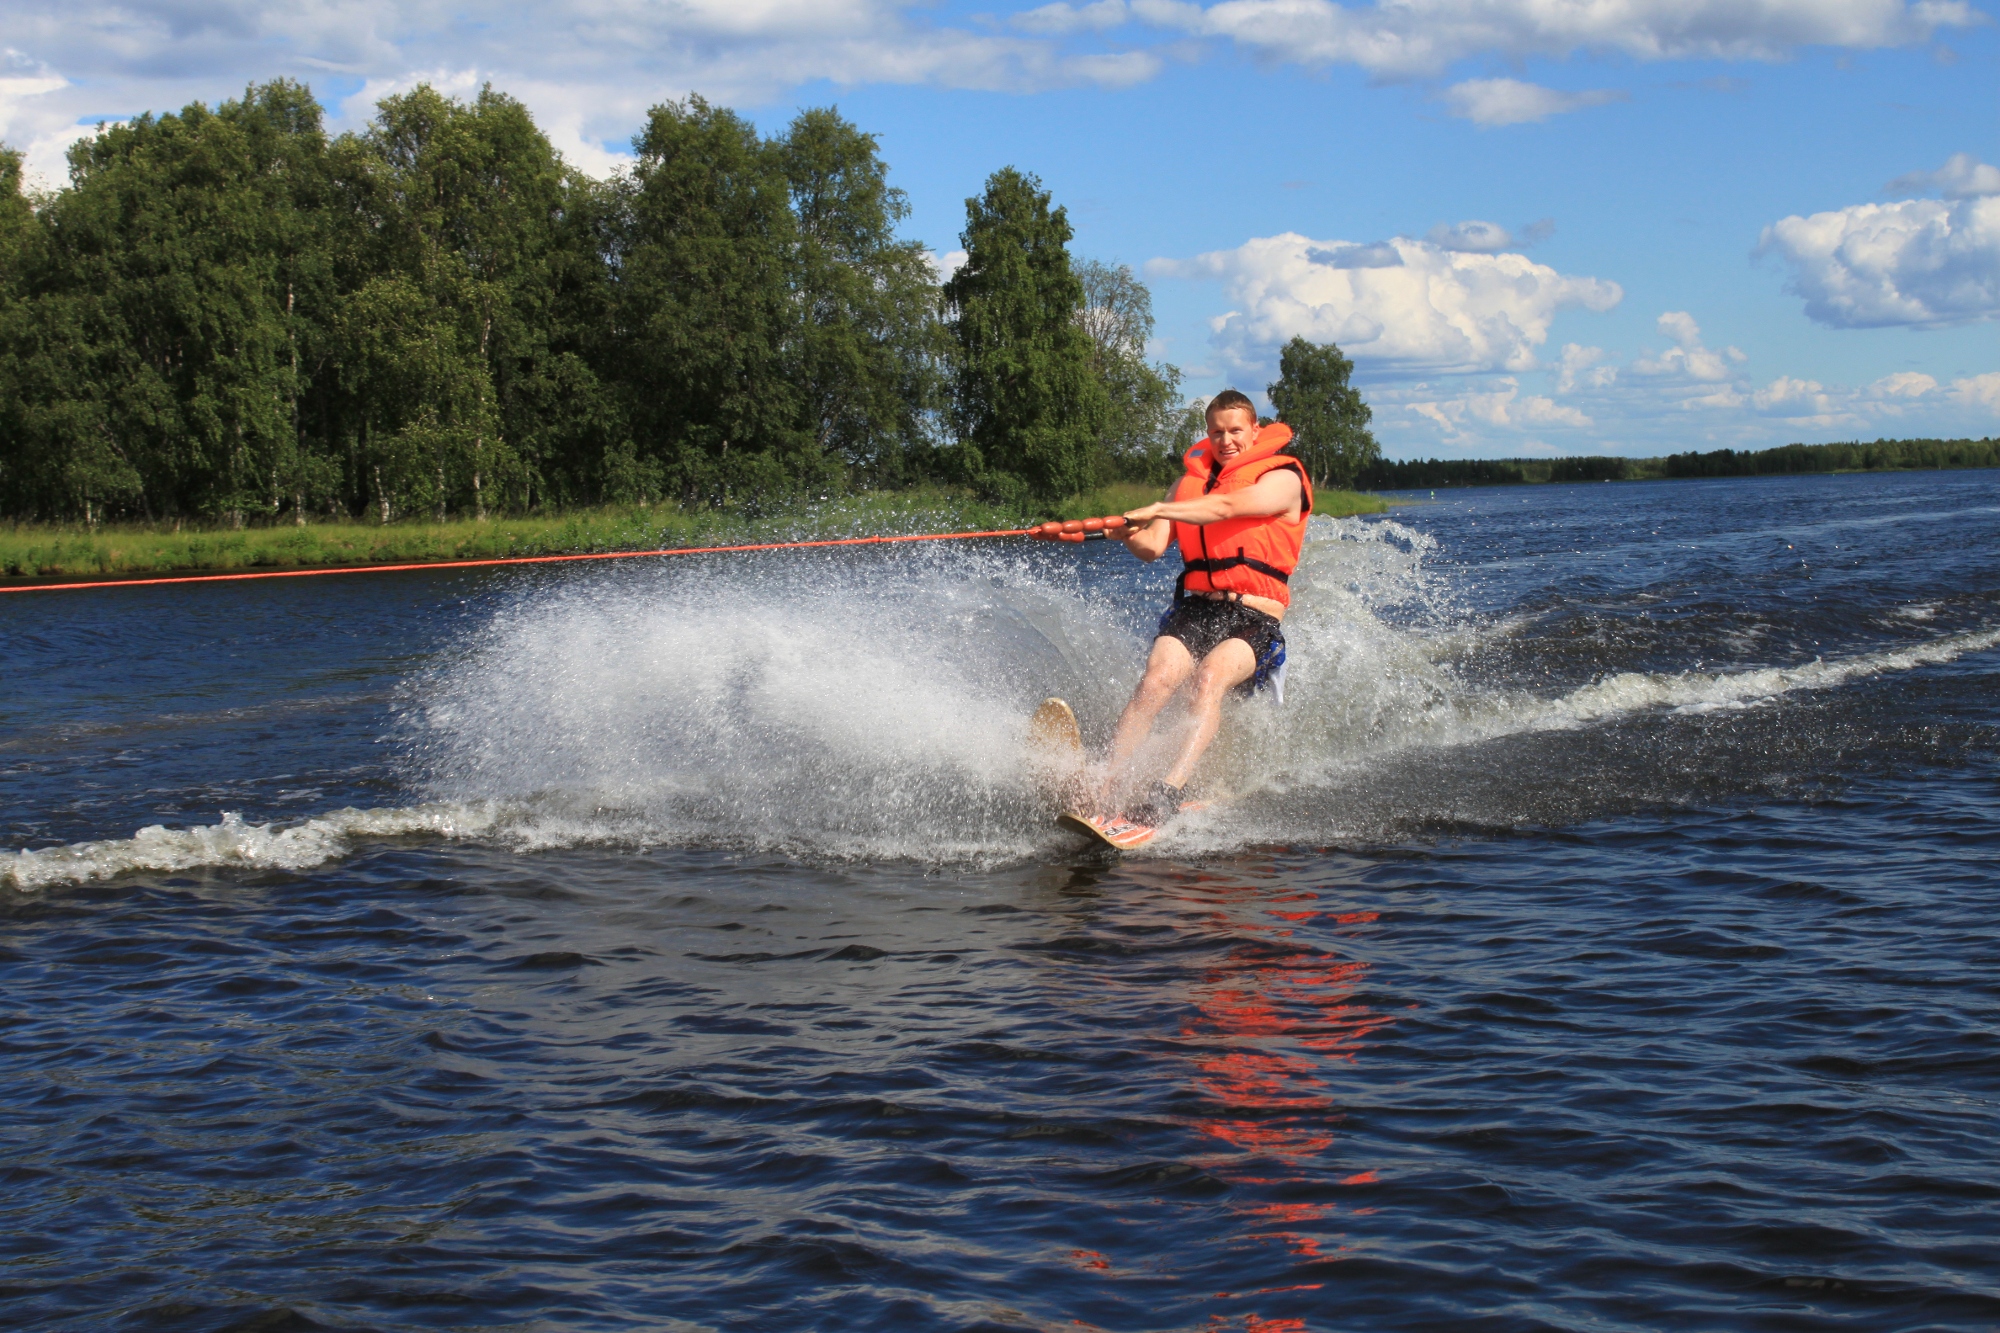 Water Skiing21 